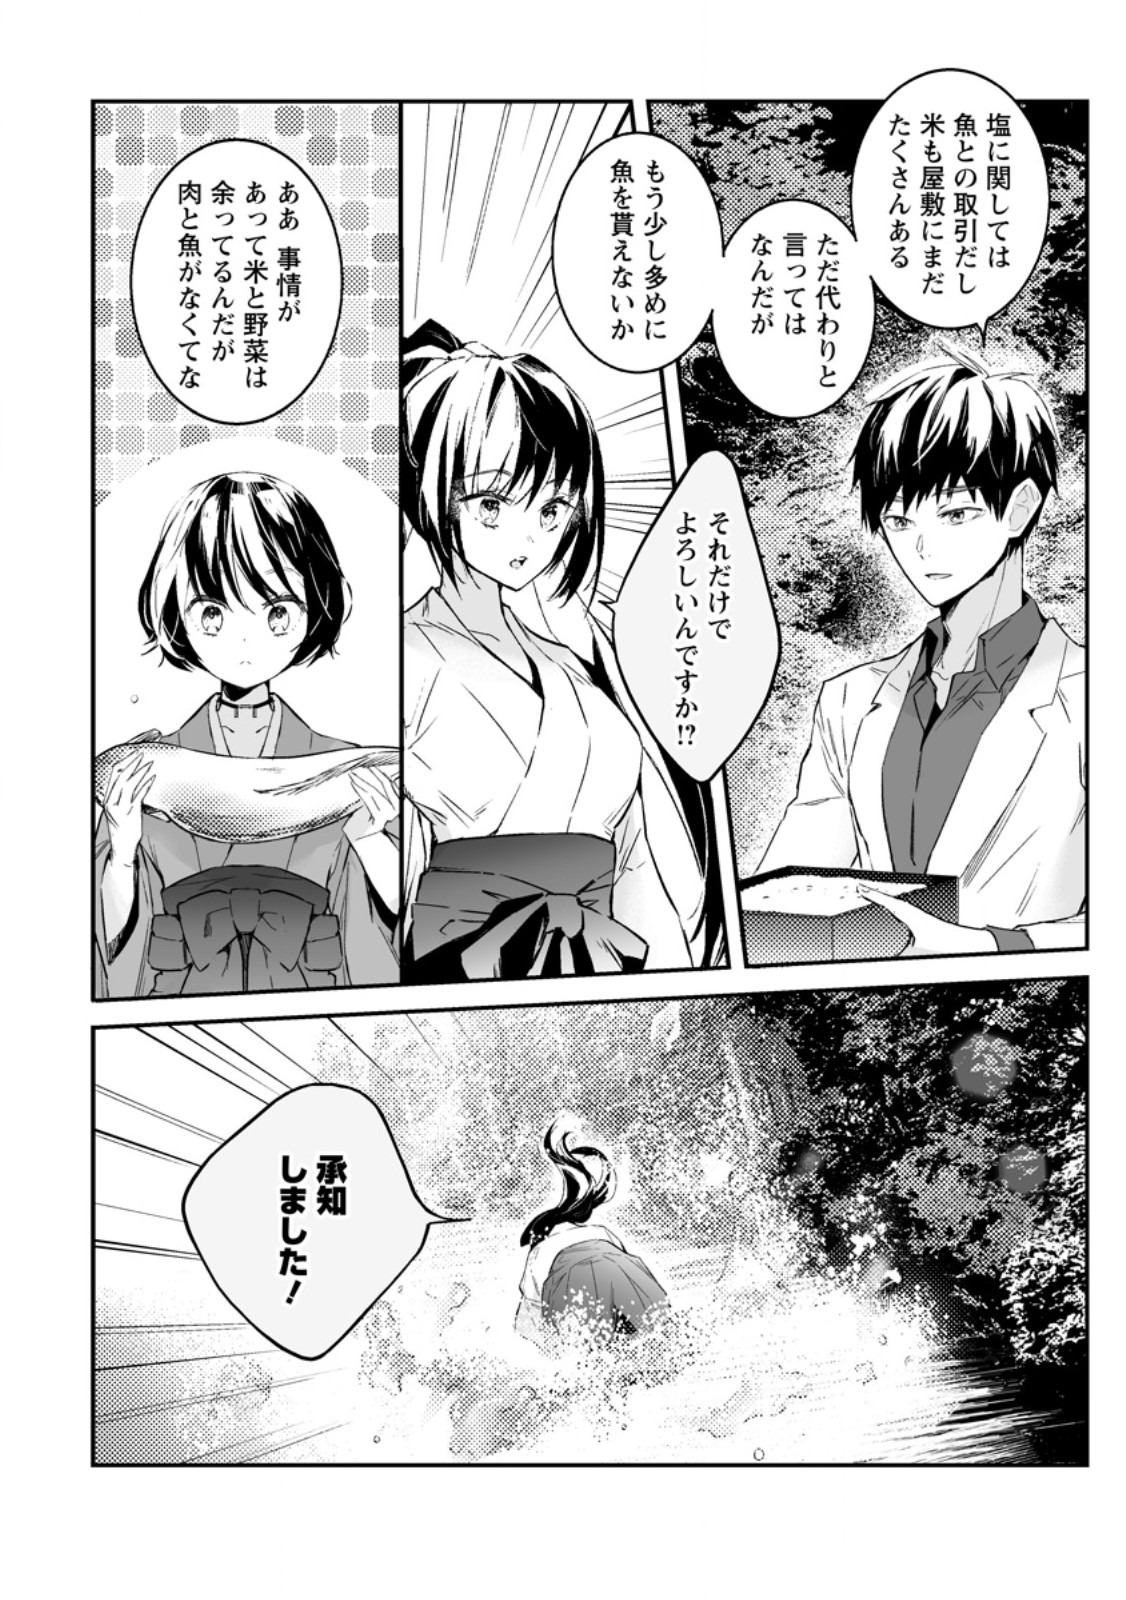 Hakui no Eiyuu - Chapter 30.3 - Page 9